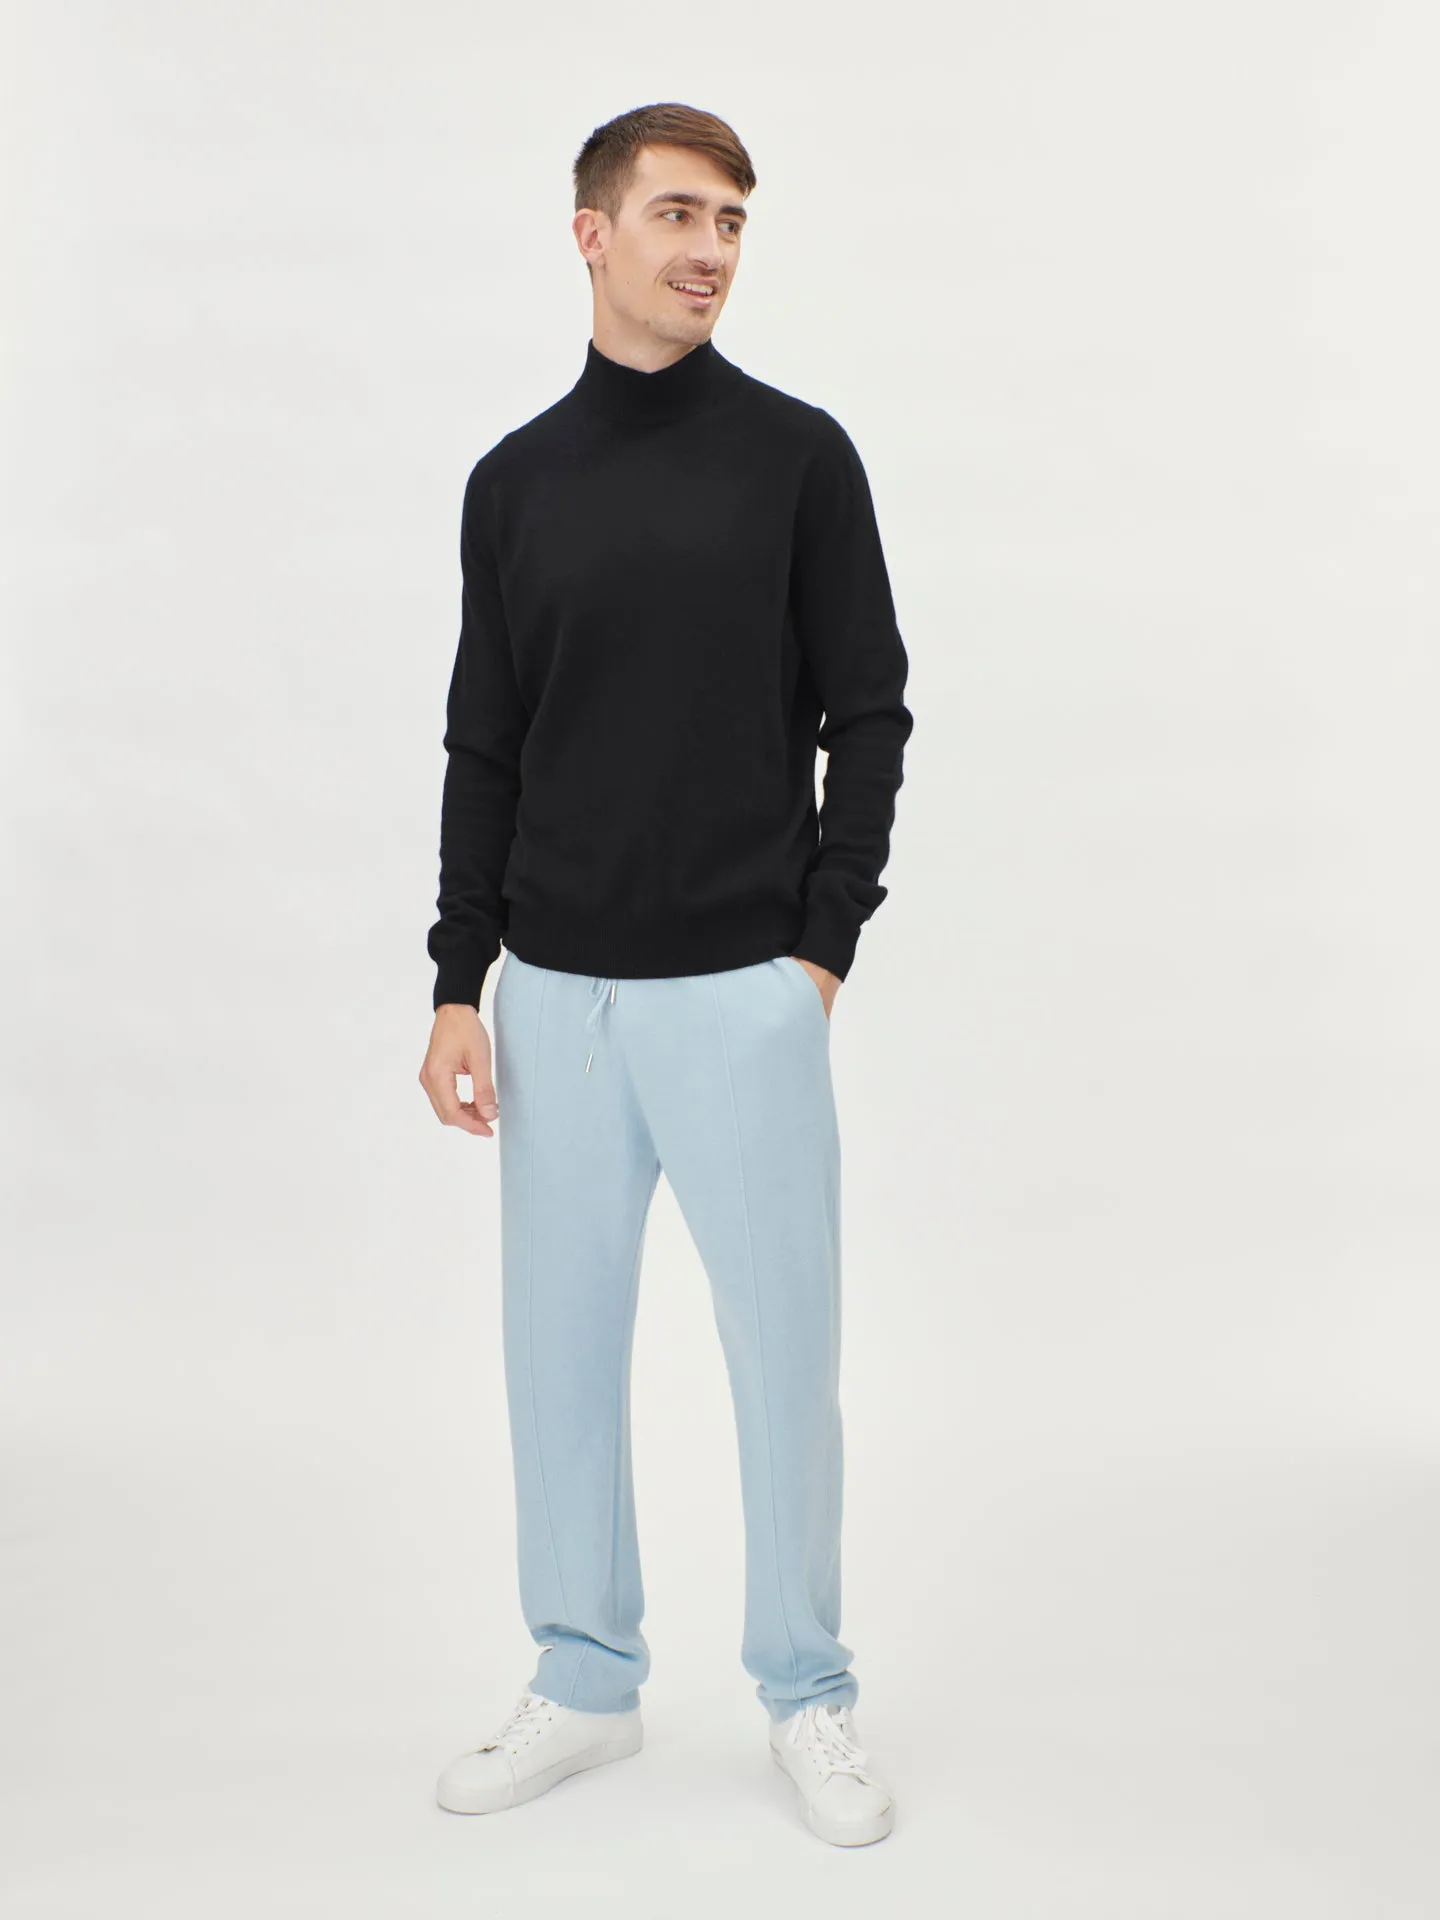 Men's Cashmere Mock Neck Sweater Black - Gobi Cashmere